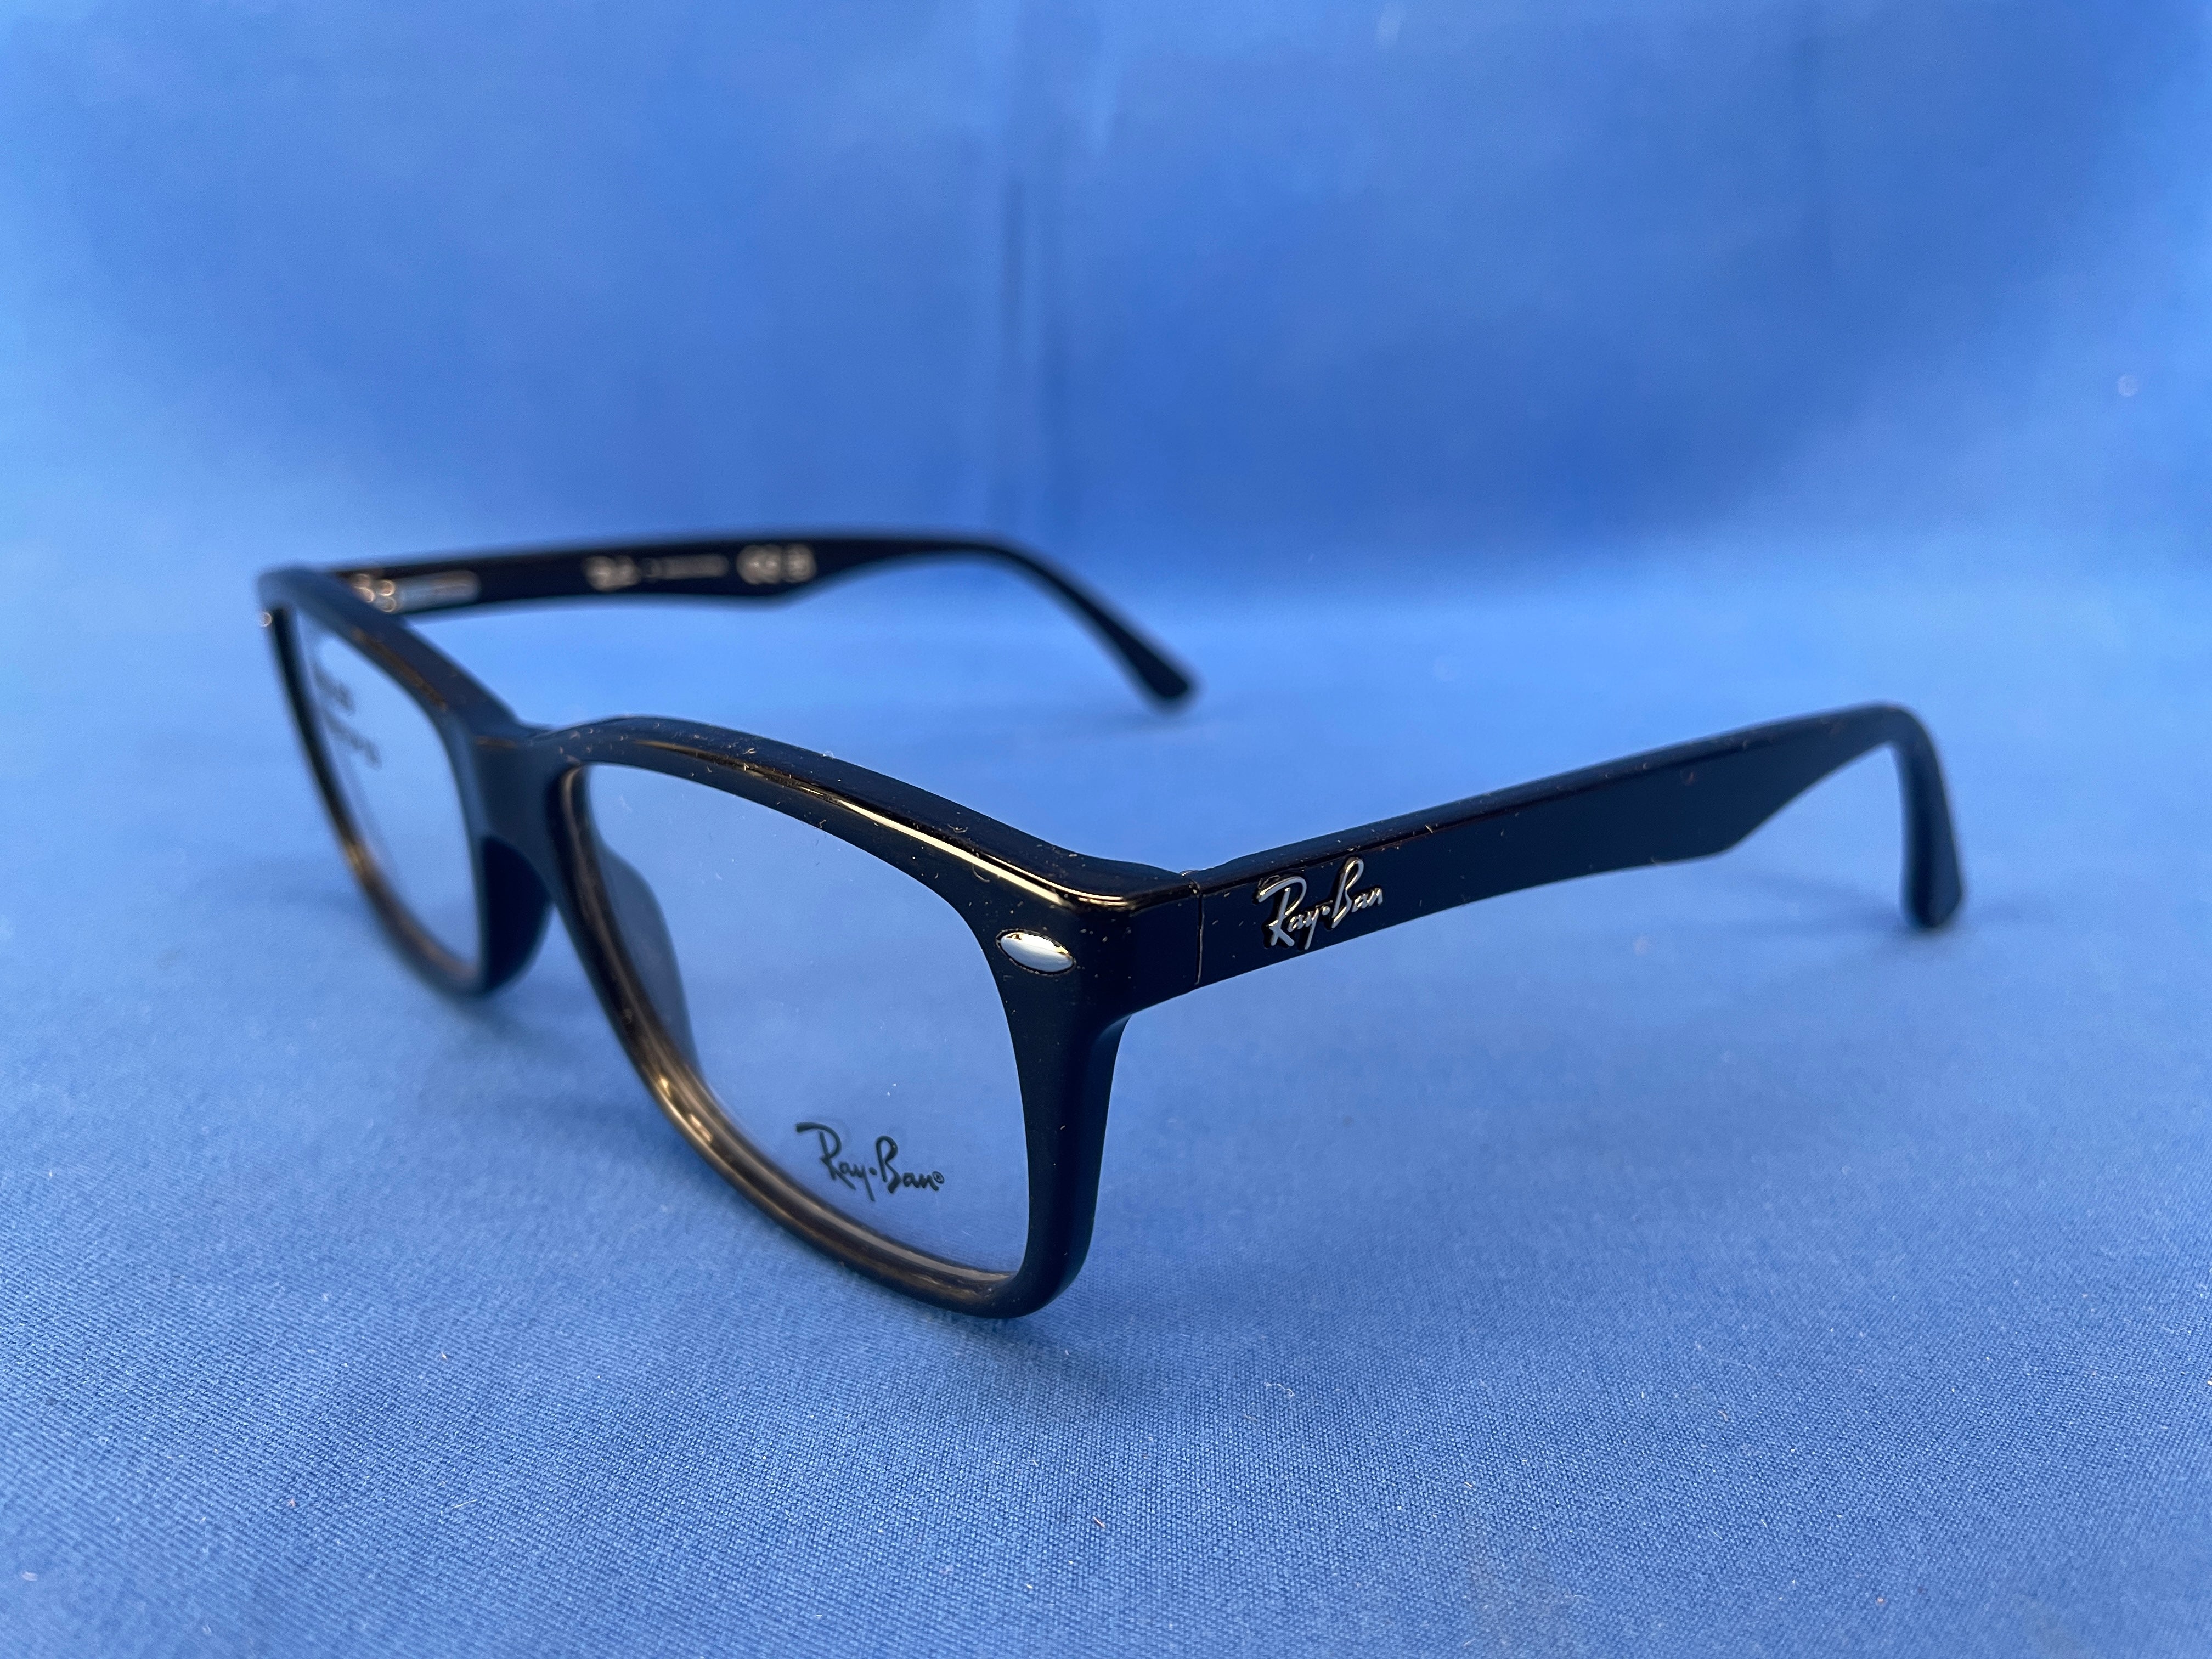 Ray-Ban Optical 0RX5228 Square Eyeglasses for Womens - Size - 53 (Shiny Black)